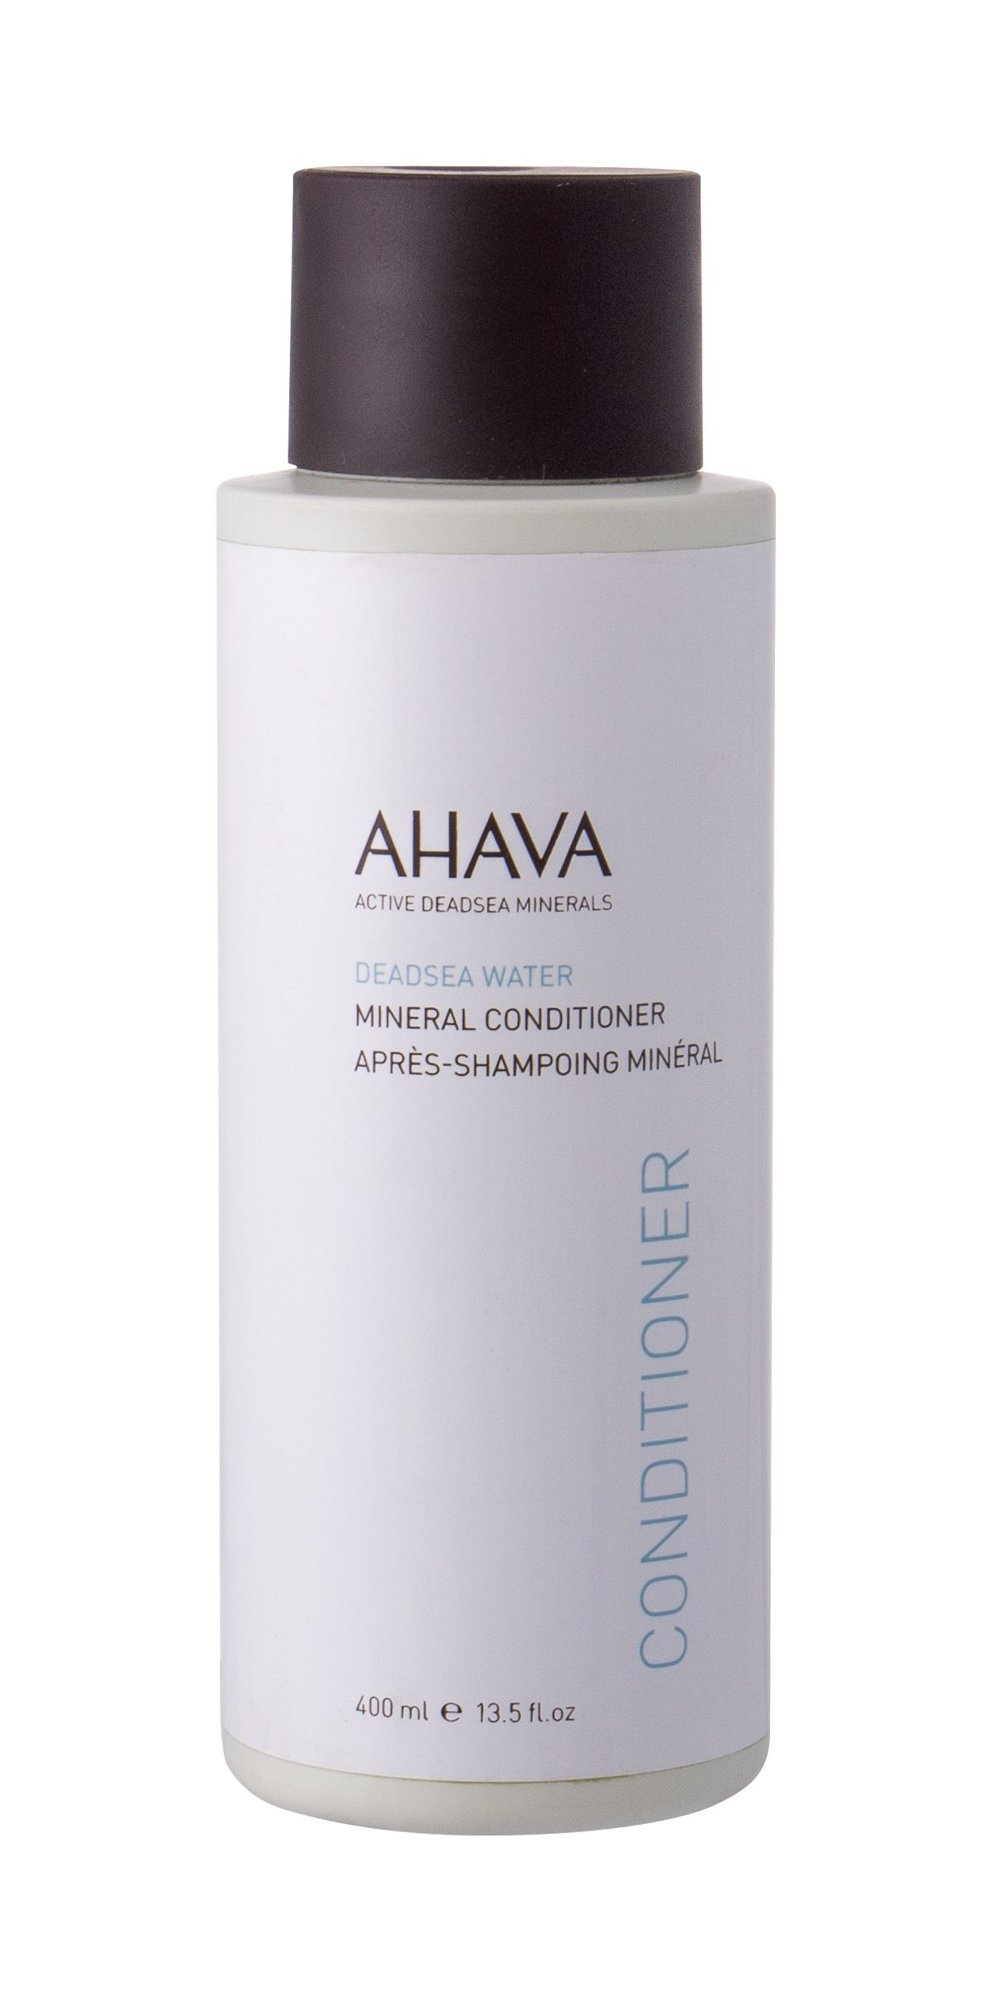 AHAVA Deadsea Water Mineral Conditioner kondicionierius